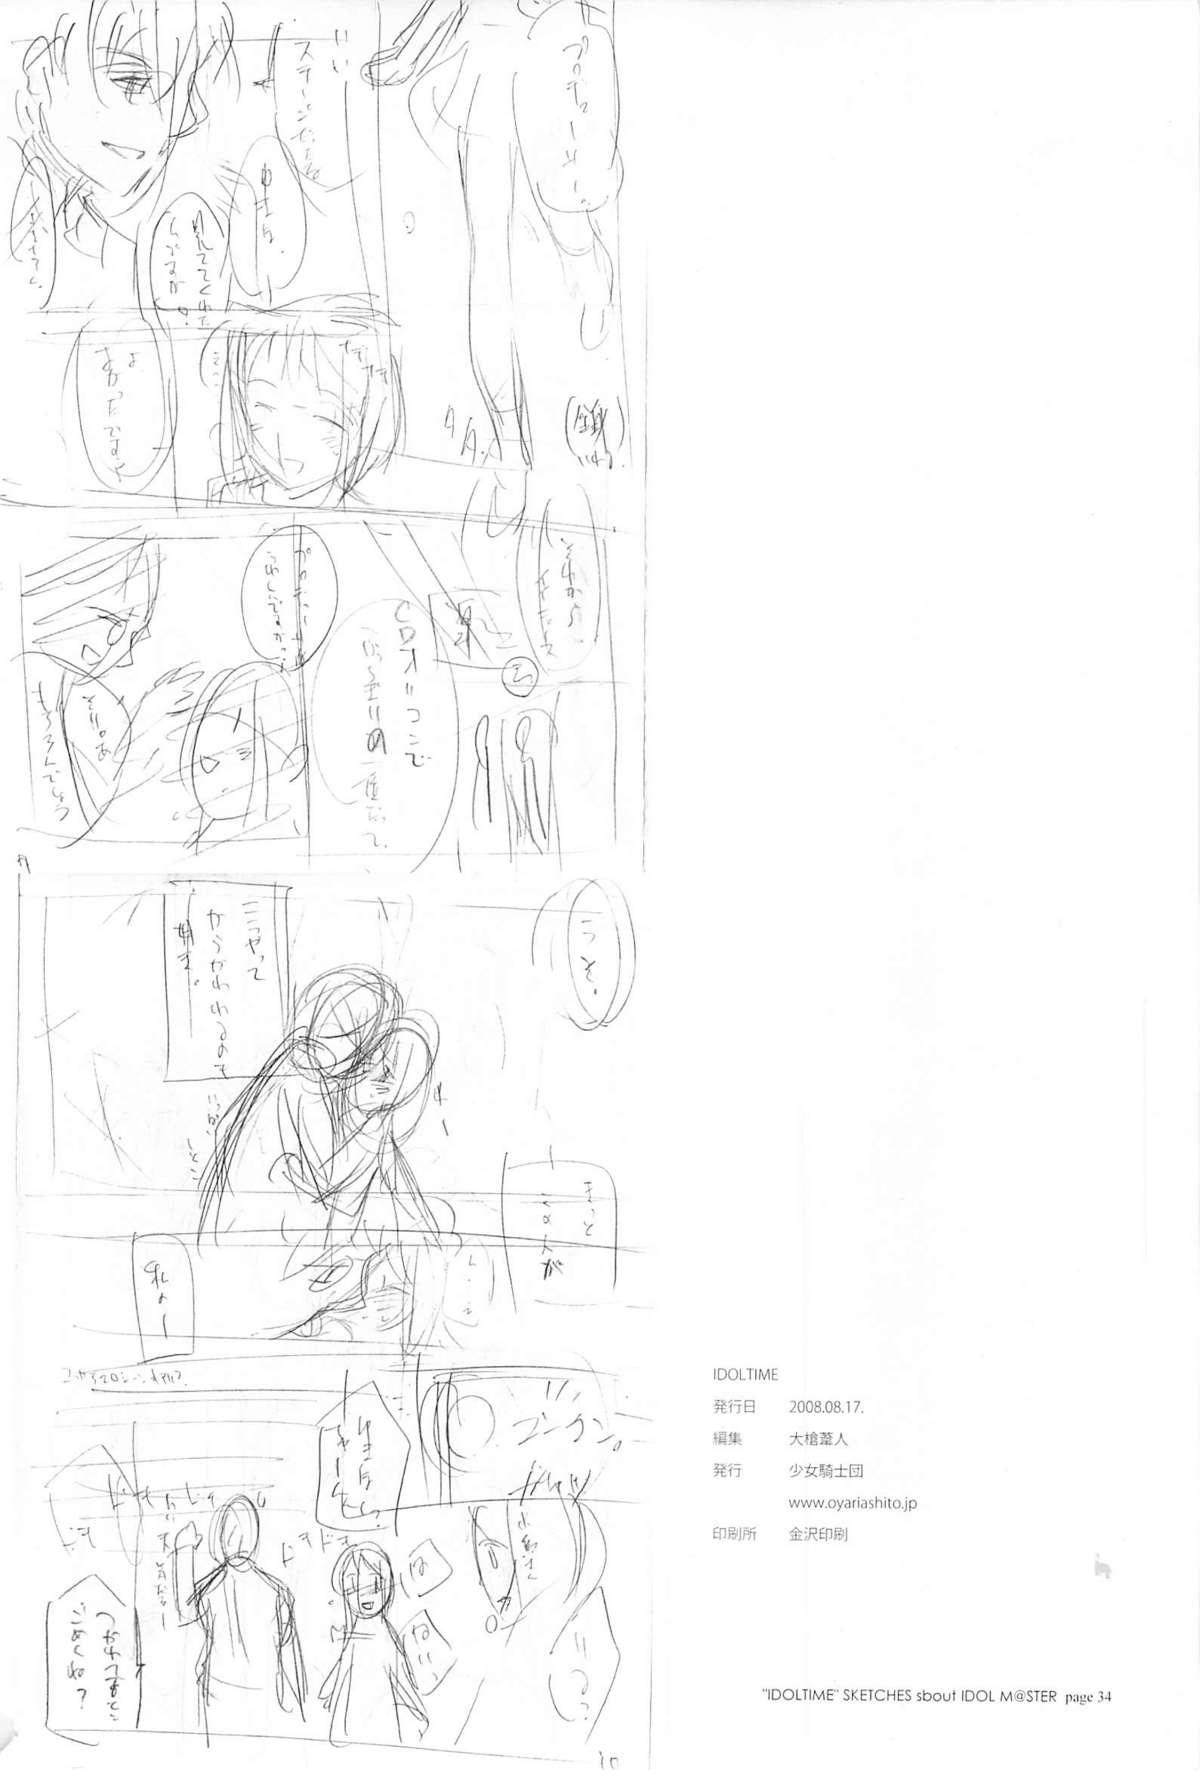 Safada IDOLTIME featuring YUKIHO HAGIWARA - The idolmaster Doctor Sex - Page 33